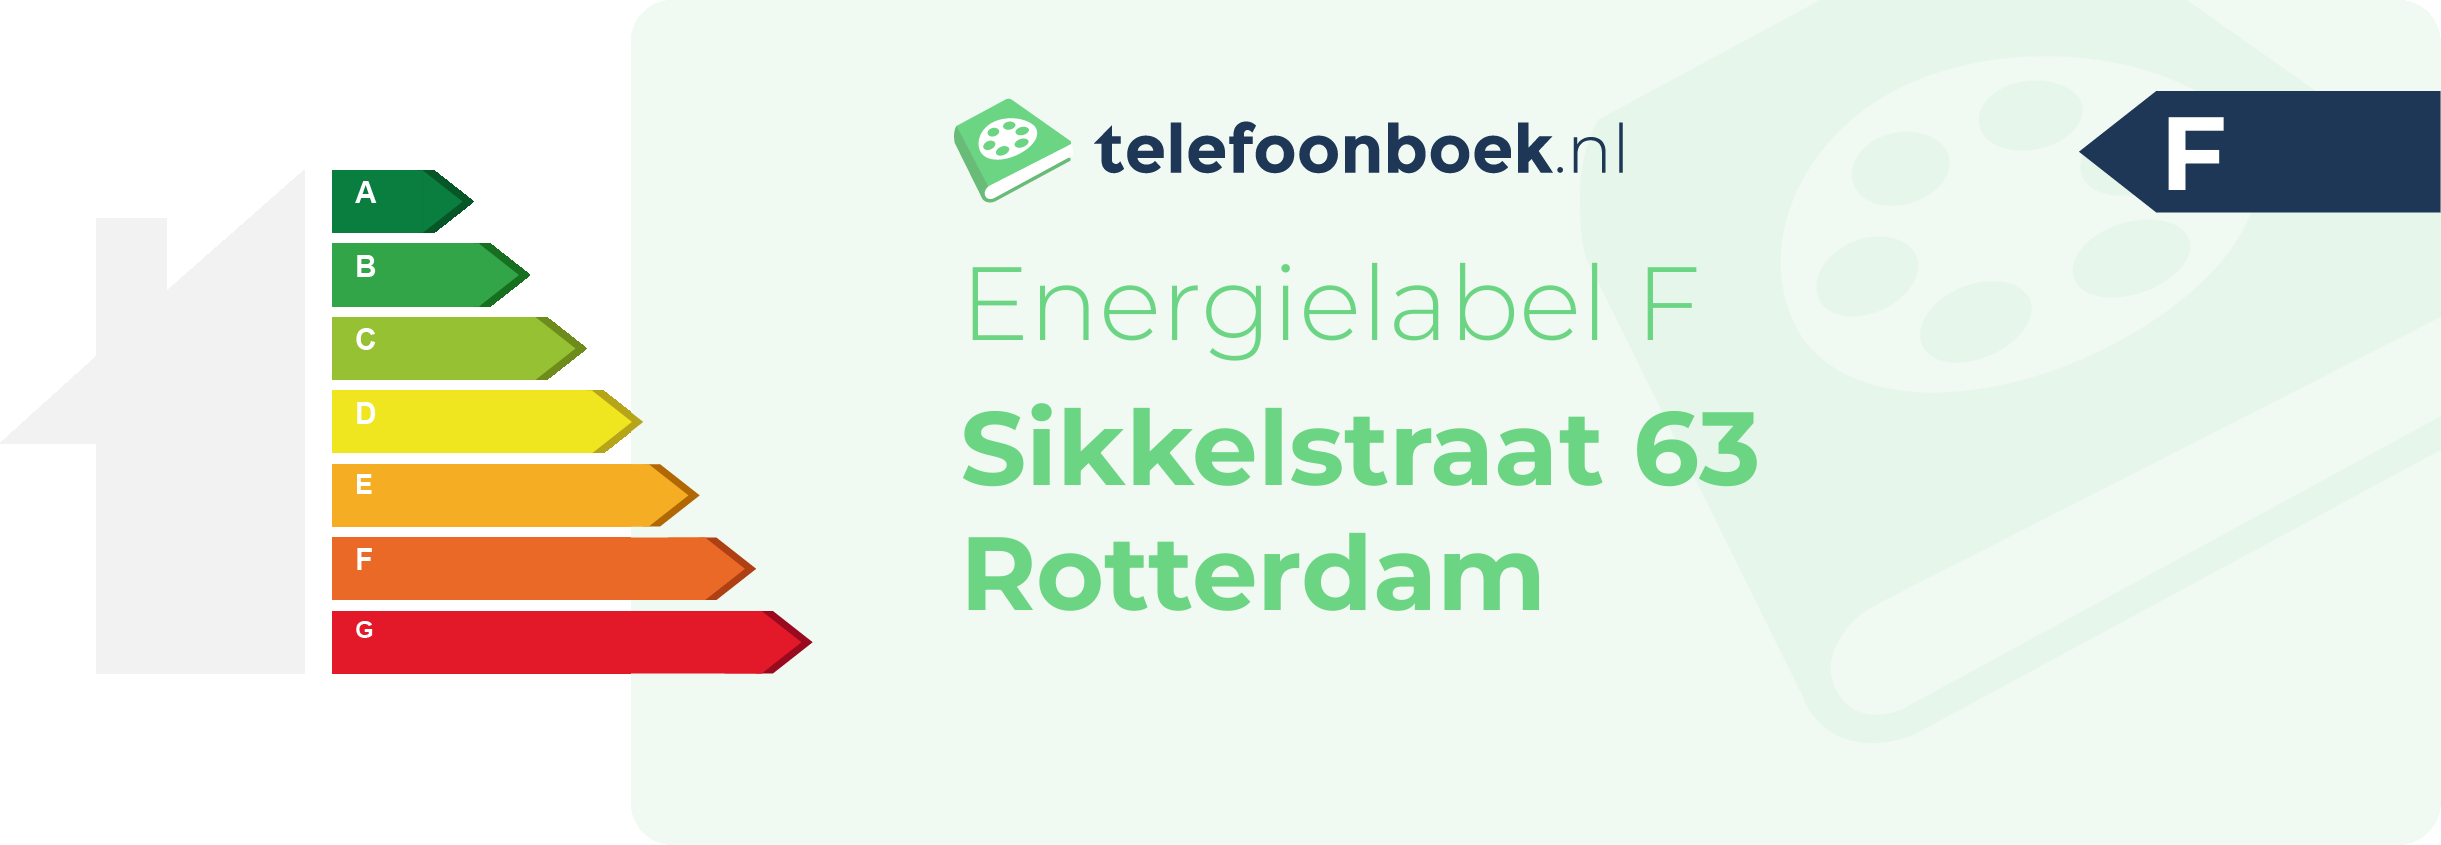 Energielabel Sikkelstraat 63 Rotterdam